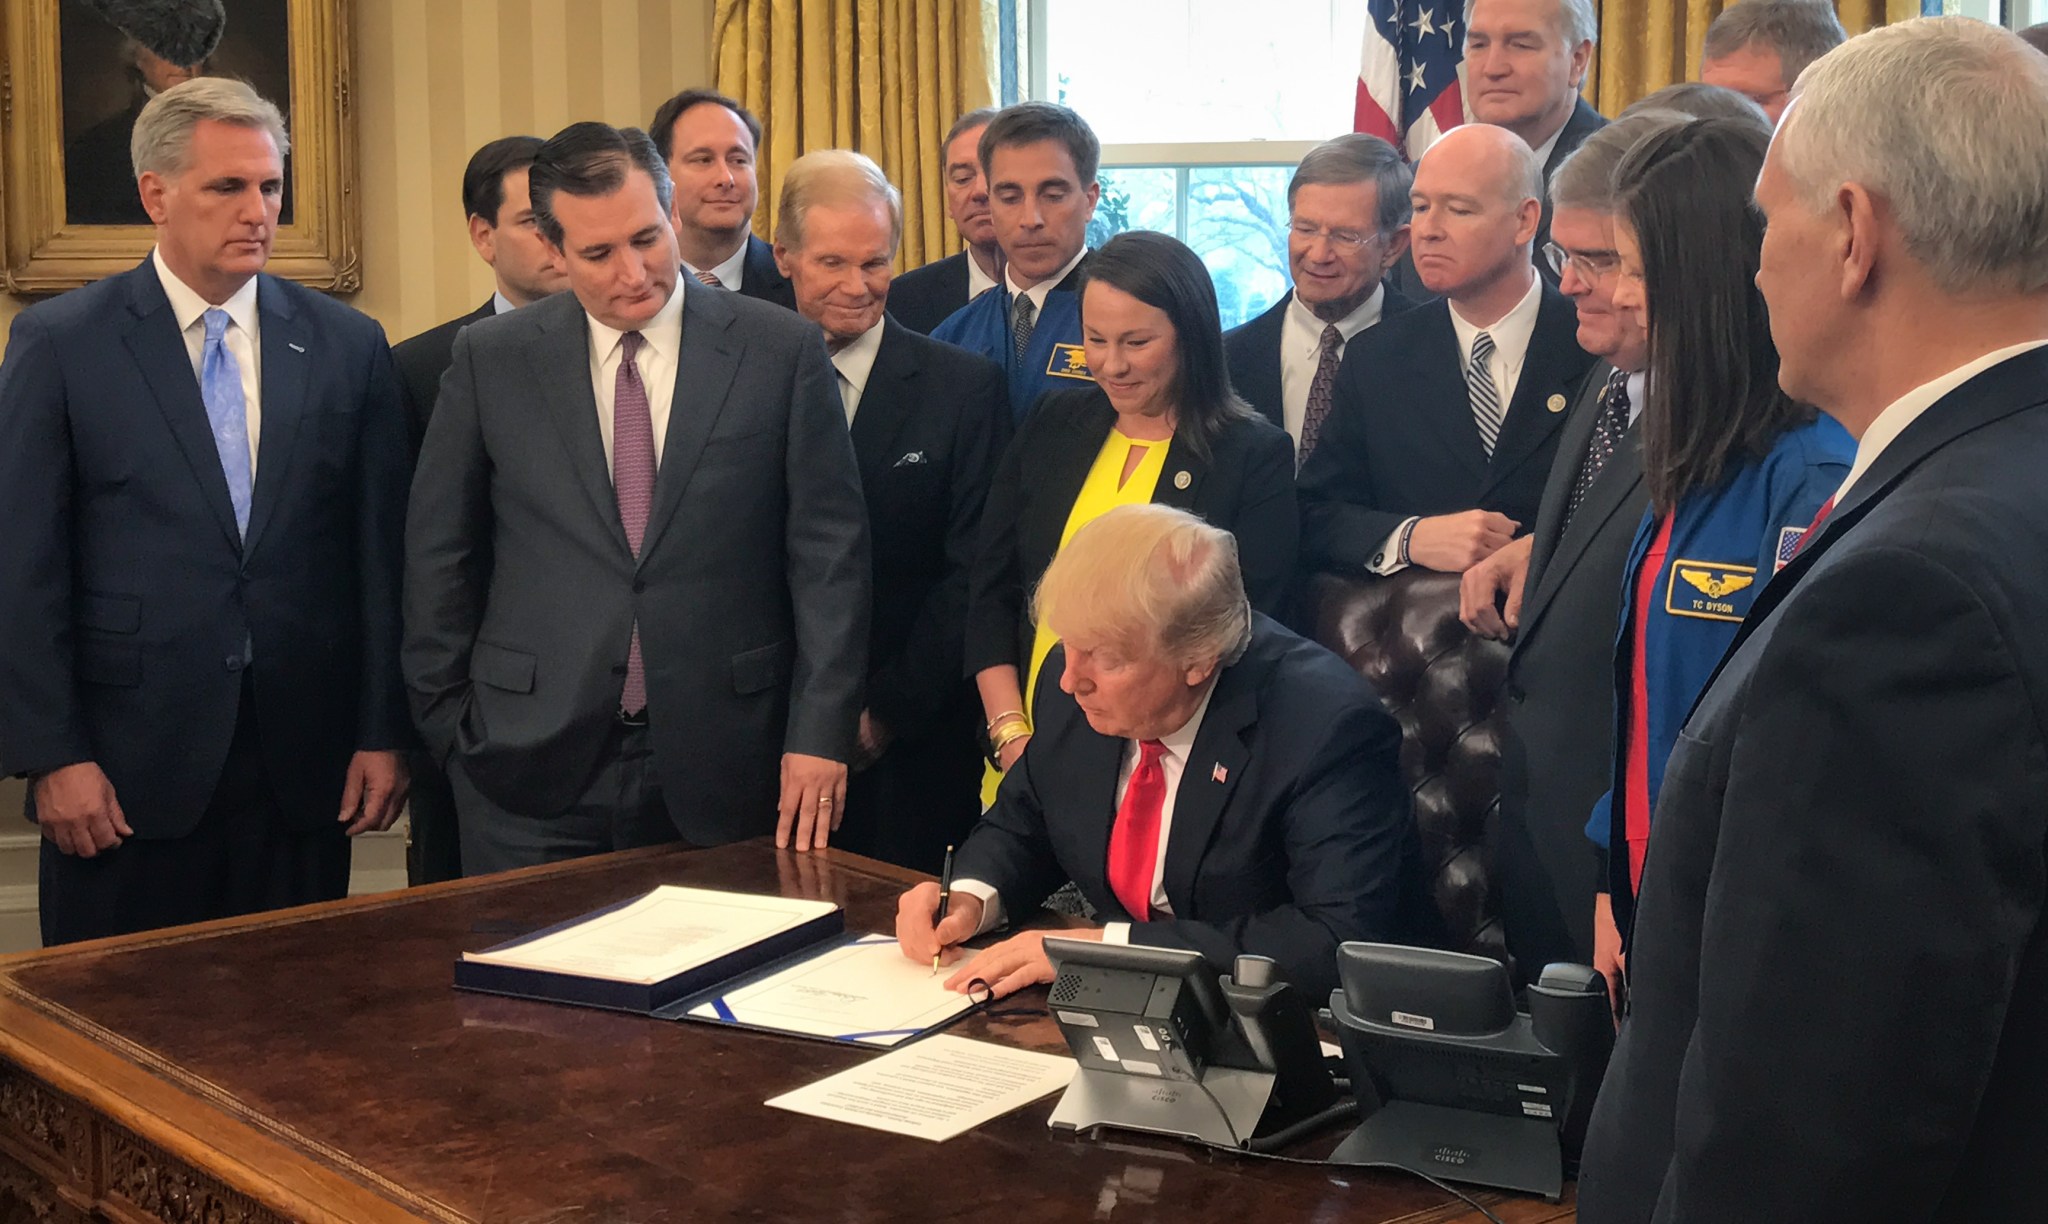 President Donald Trump signs NASA authorization act alongside NASA officials and members of Congress